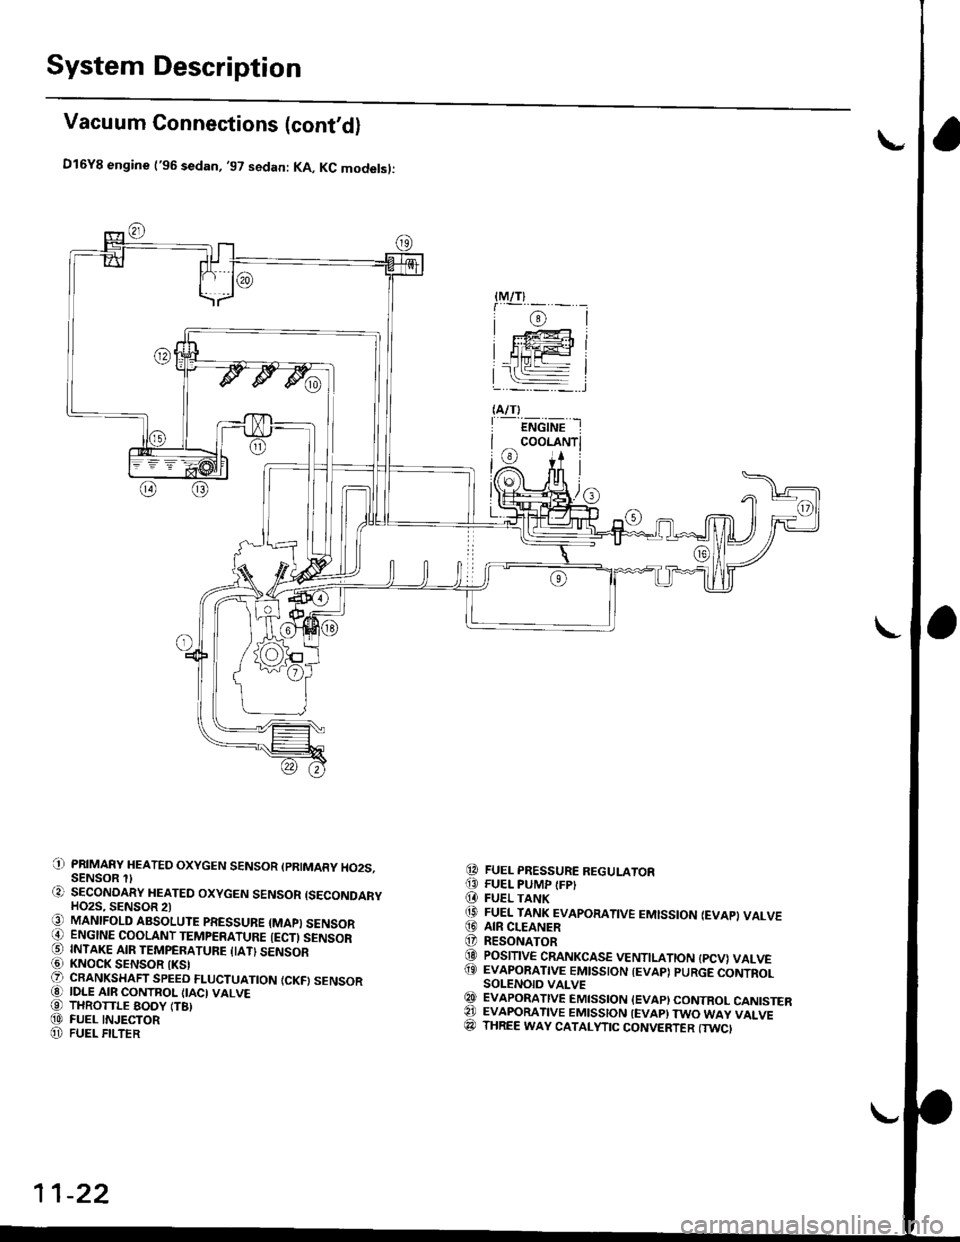 HONDA CIVIC 1999 6.G Repair Manual System Description
Vacuum Connections (contd)
D16Y8 engine (96 sedan, 97 sedan: KA, KC modelsl:
PRIMARY HEATED OXYGEN SENSOR (PRIMARY HO2S.SENSOR  SECONOARY HEATED OXYGEN SENSOR {SECONDARYHO2S, SEN